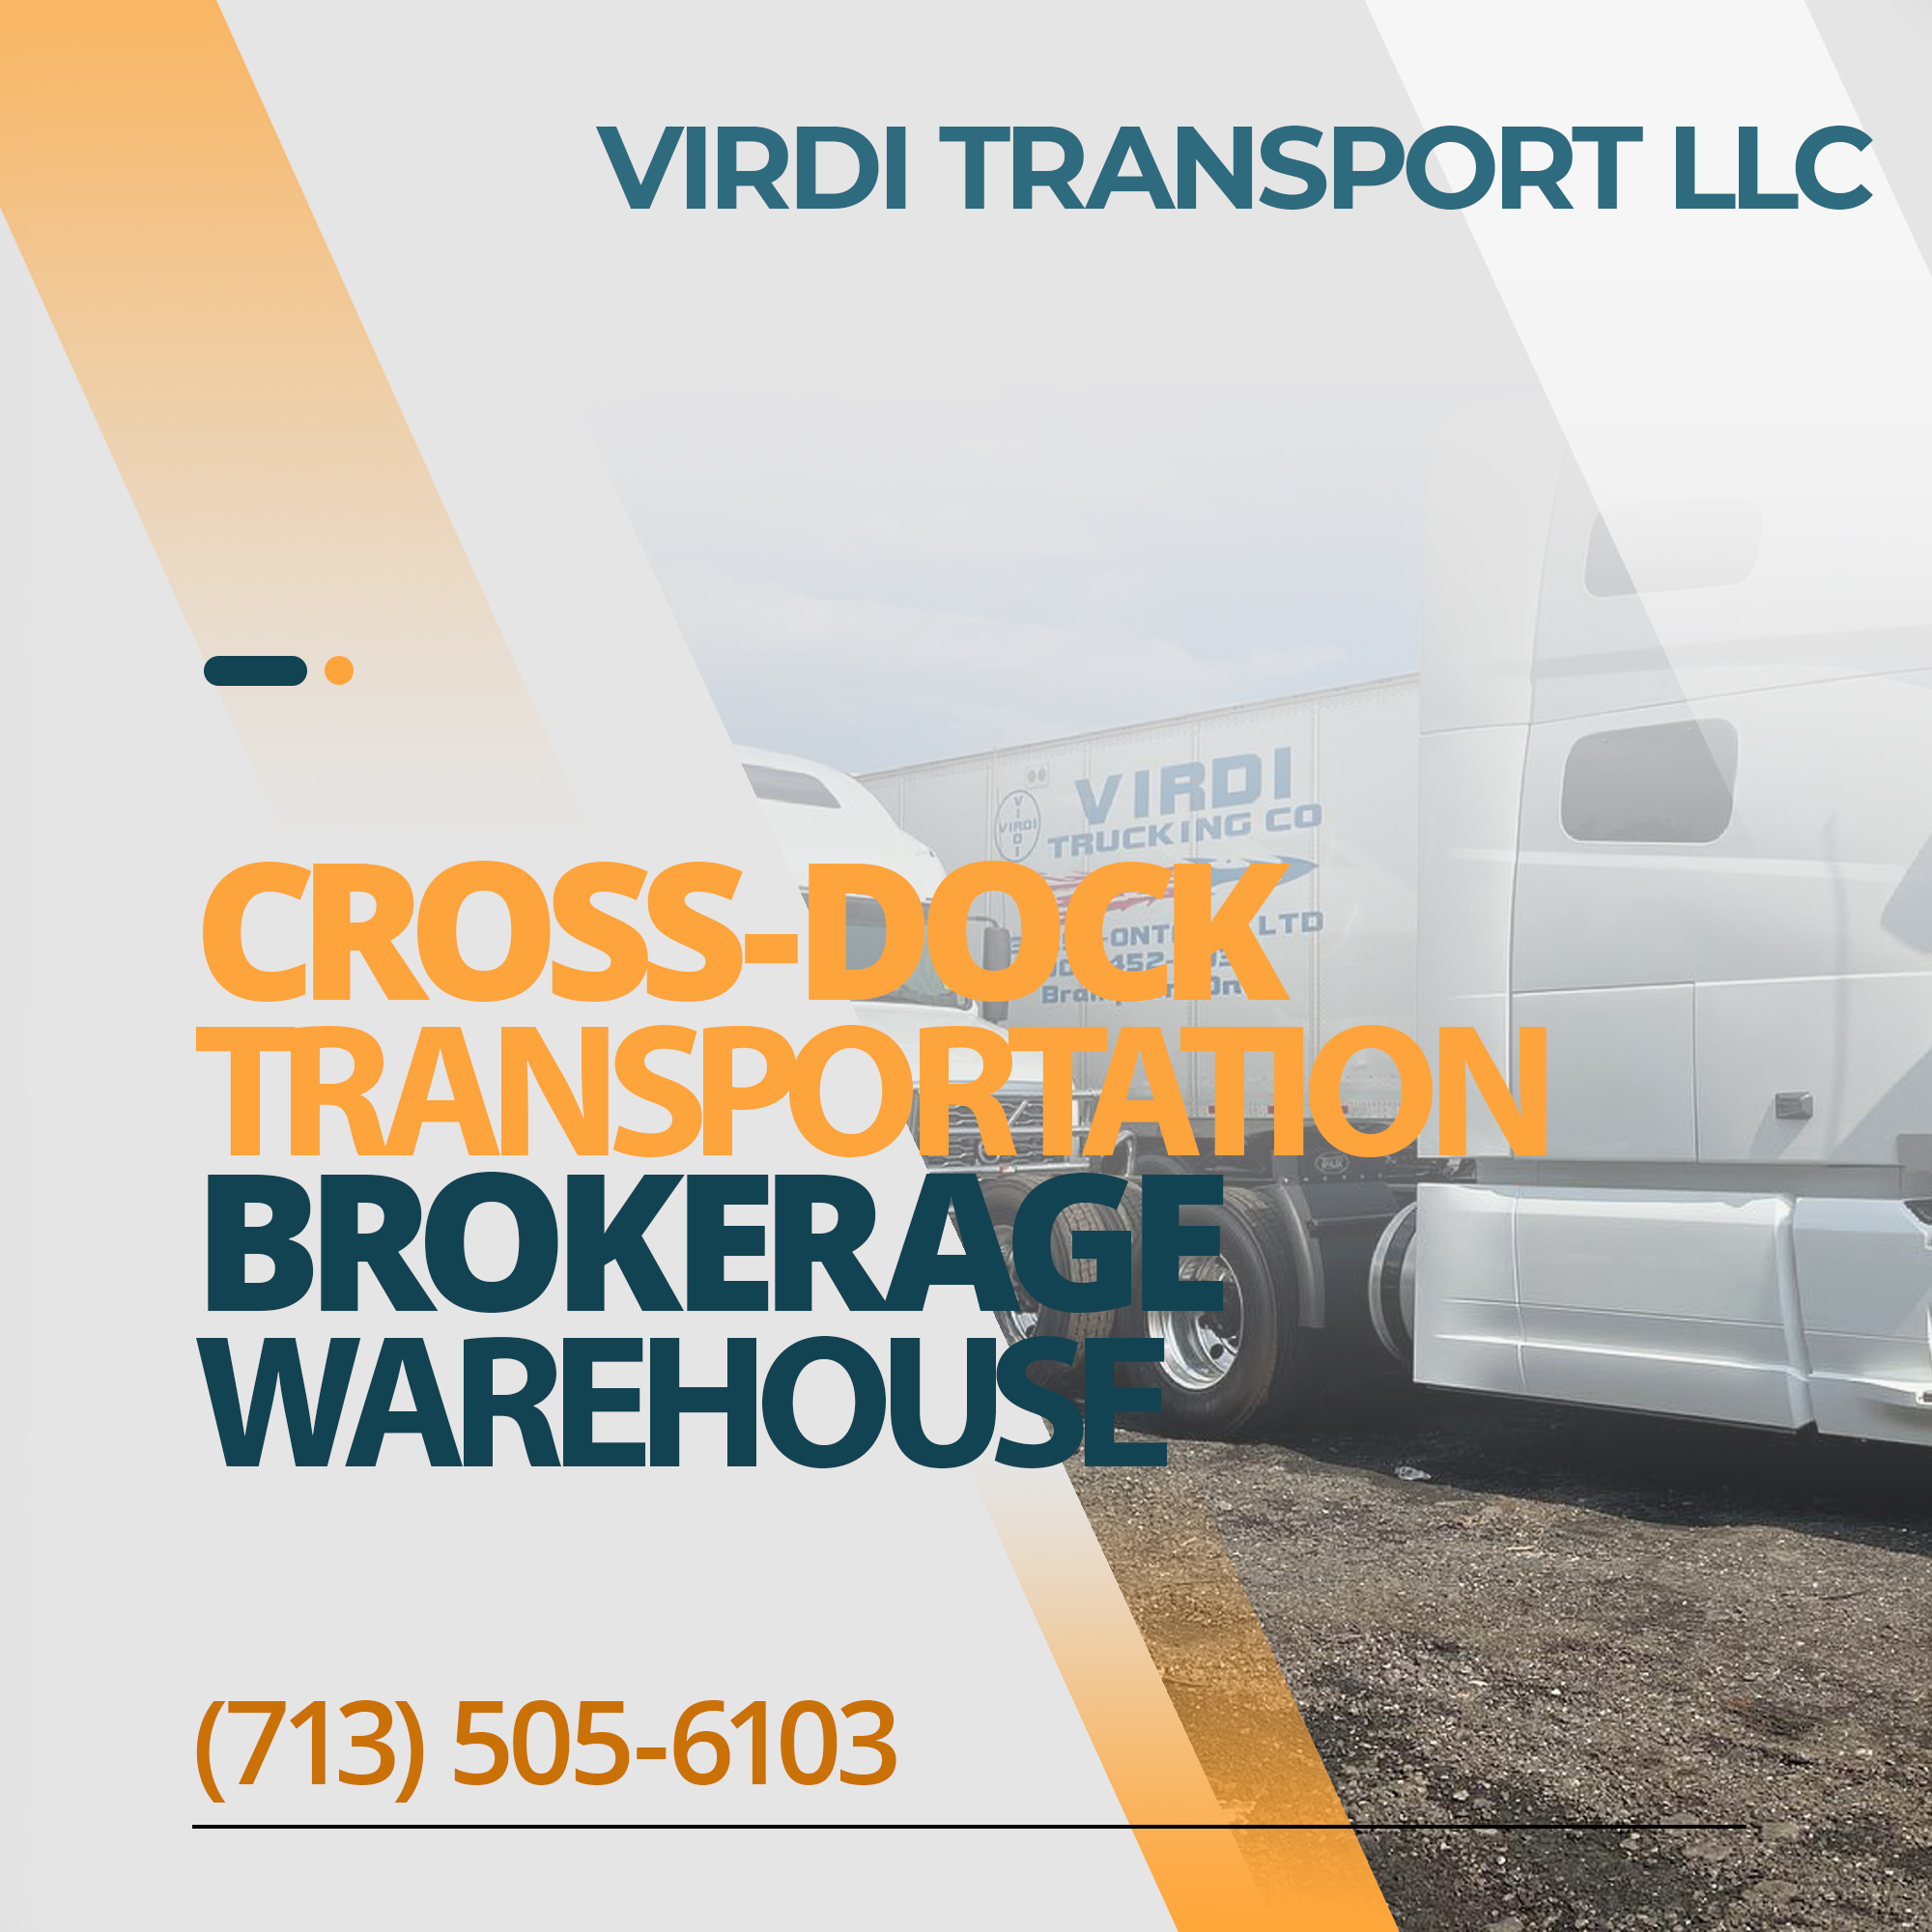 VIRDI TRANSPORT LLC